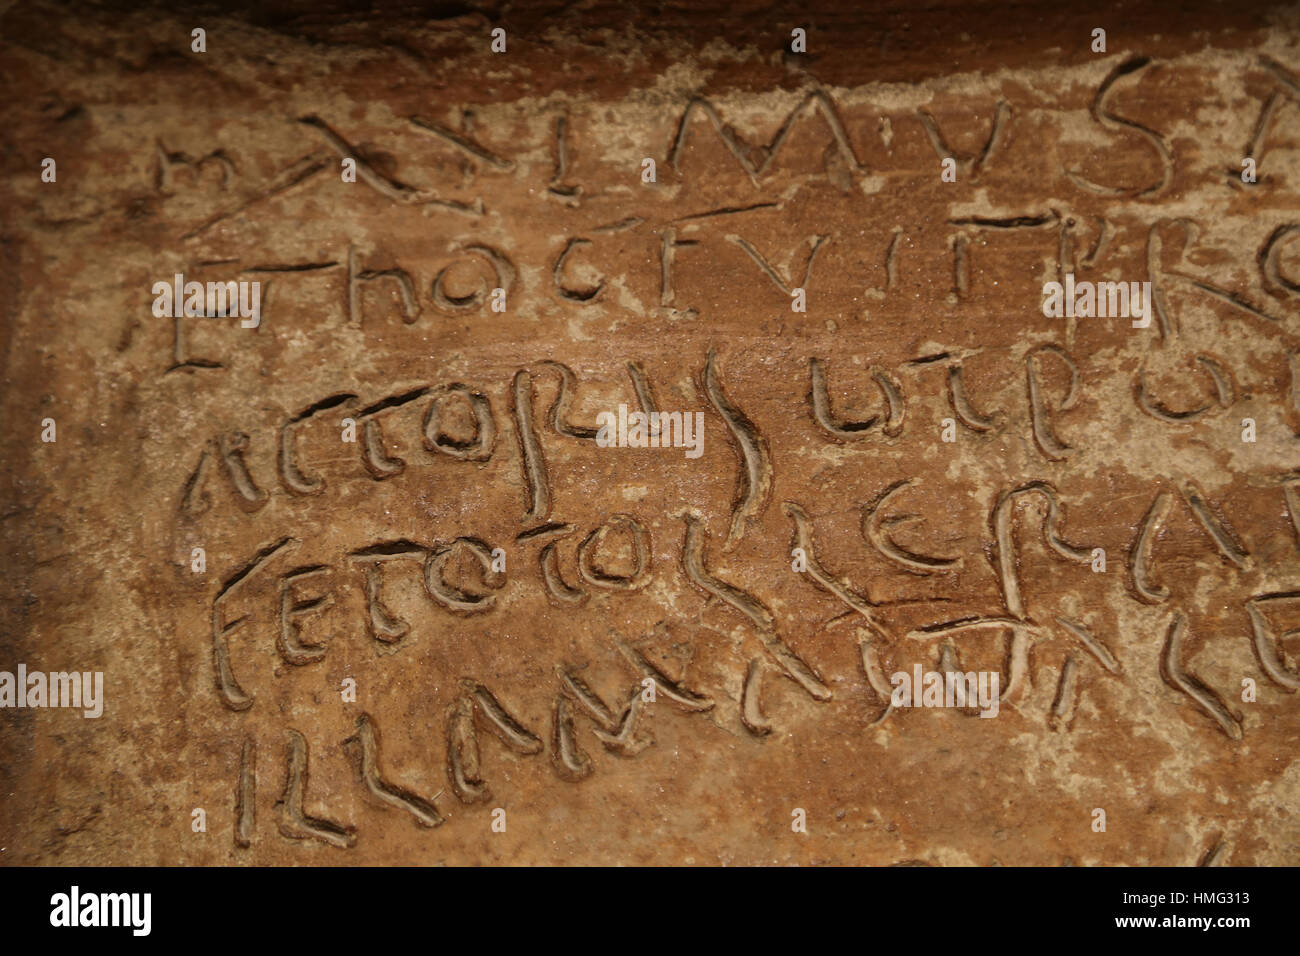 Tablet-PC. Clay. 3. Jahrhundert. Villafranca de Los Barros (Badajoz). Römische Kursive. Spanien. Nationales Archäologisches Museum, Madrid. Spanien. Stockfoto